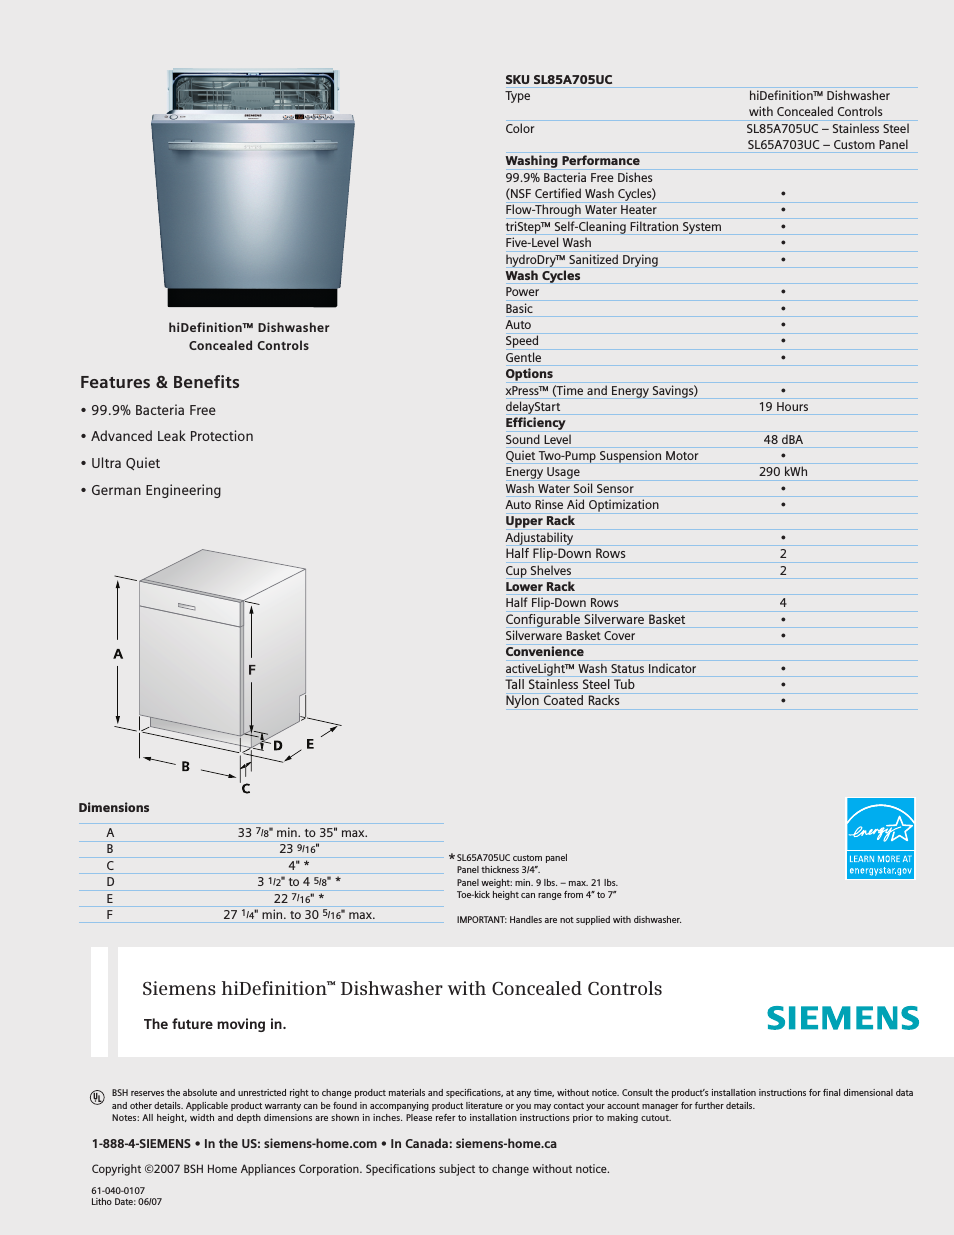 hiDefinition 48 dBA Dishwasher